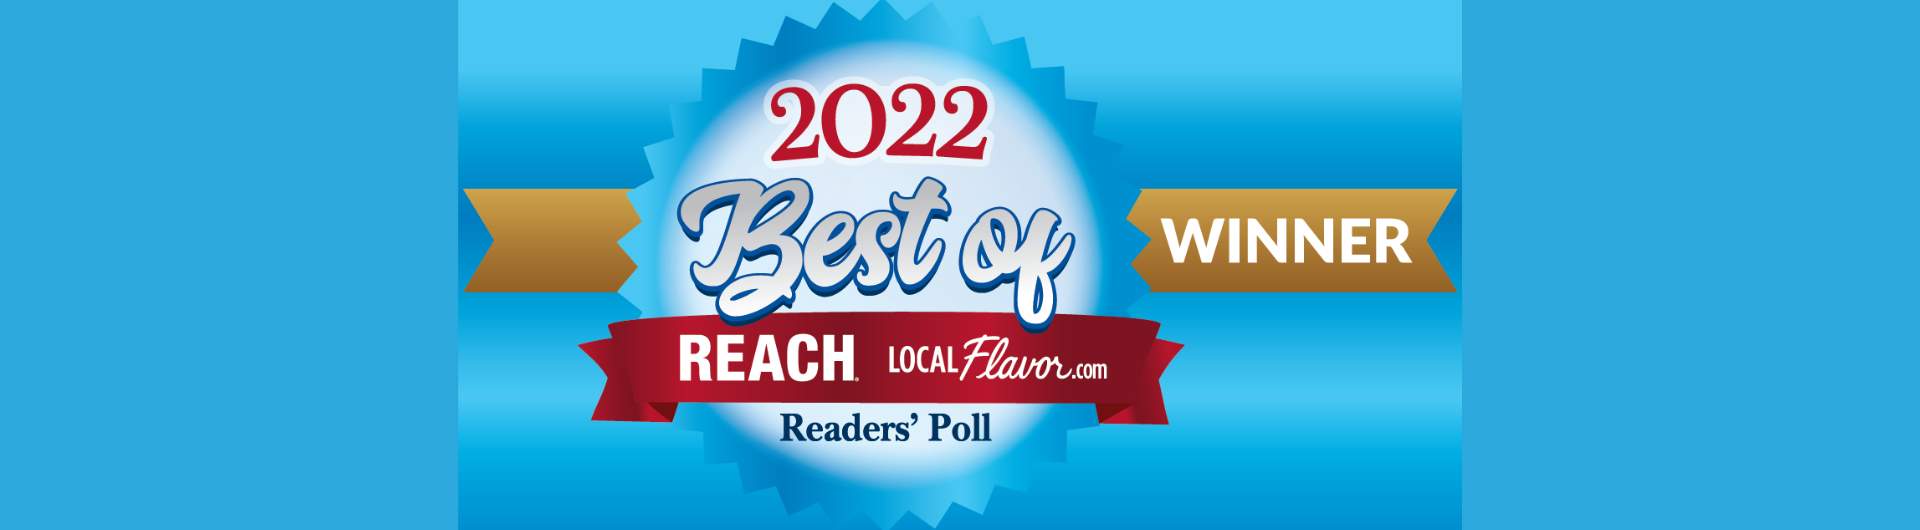 Reach Best of 2022